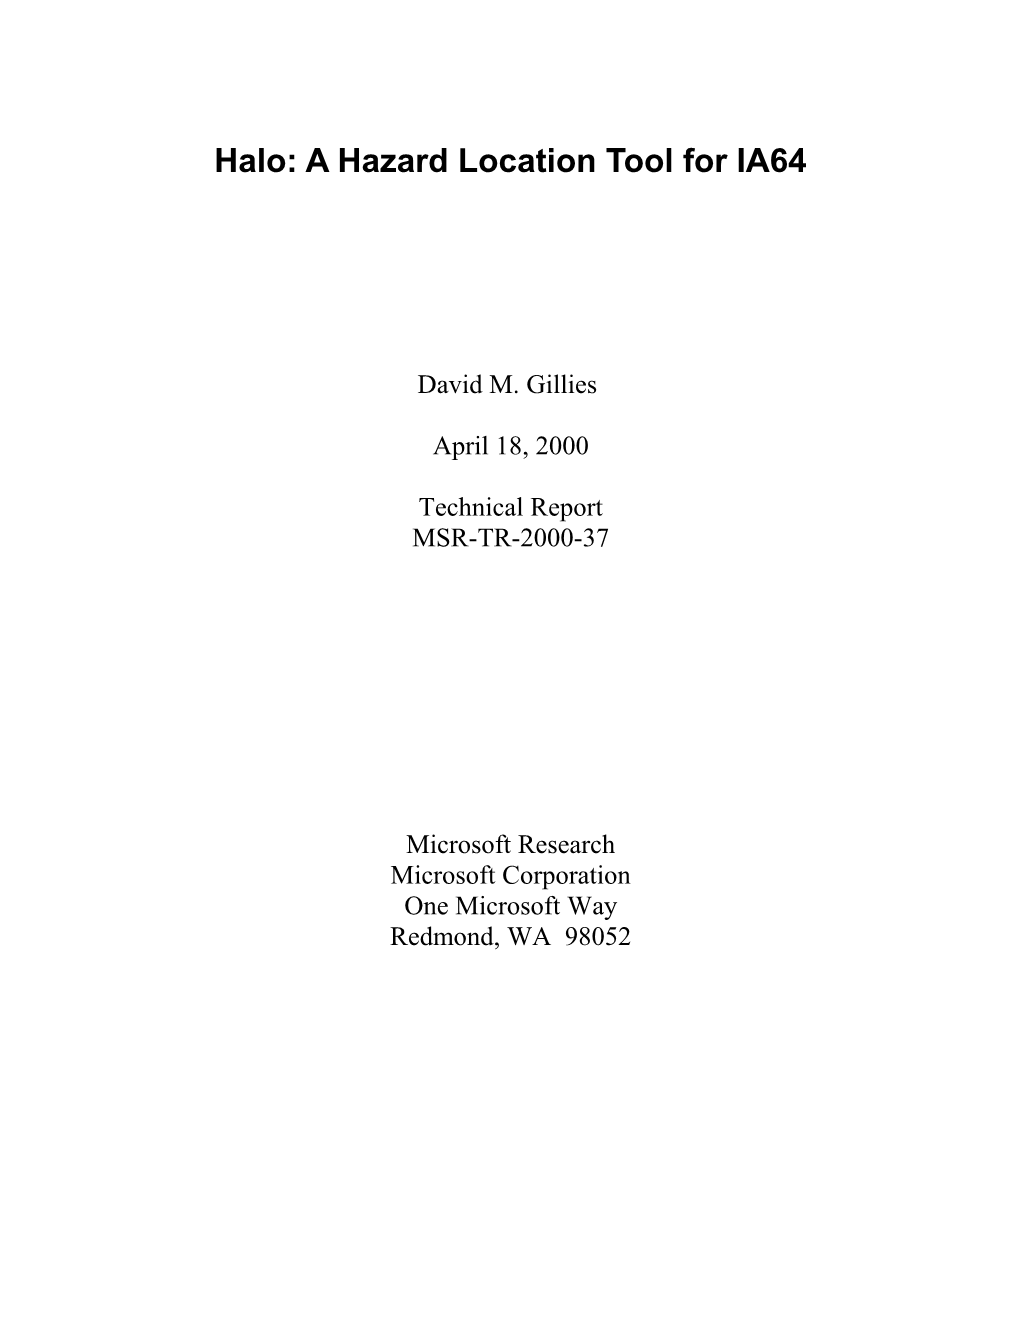 Halo: a Hazard Location Tool for IA64